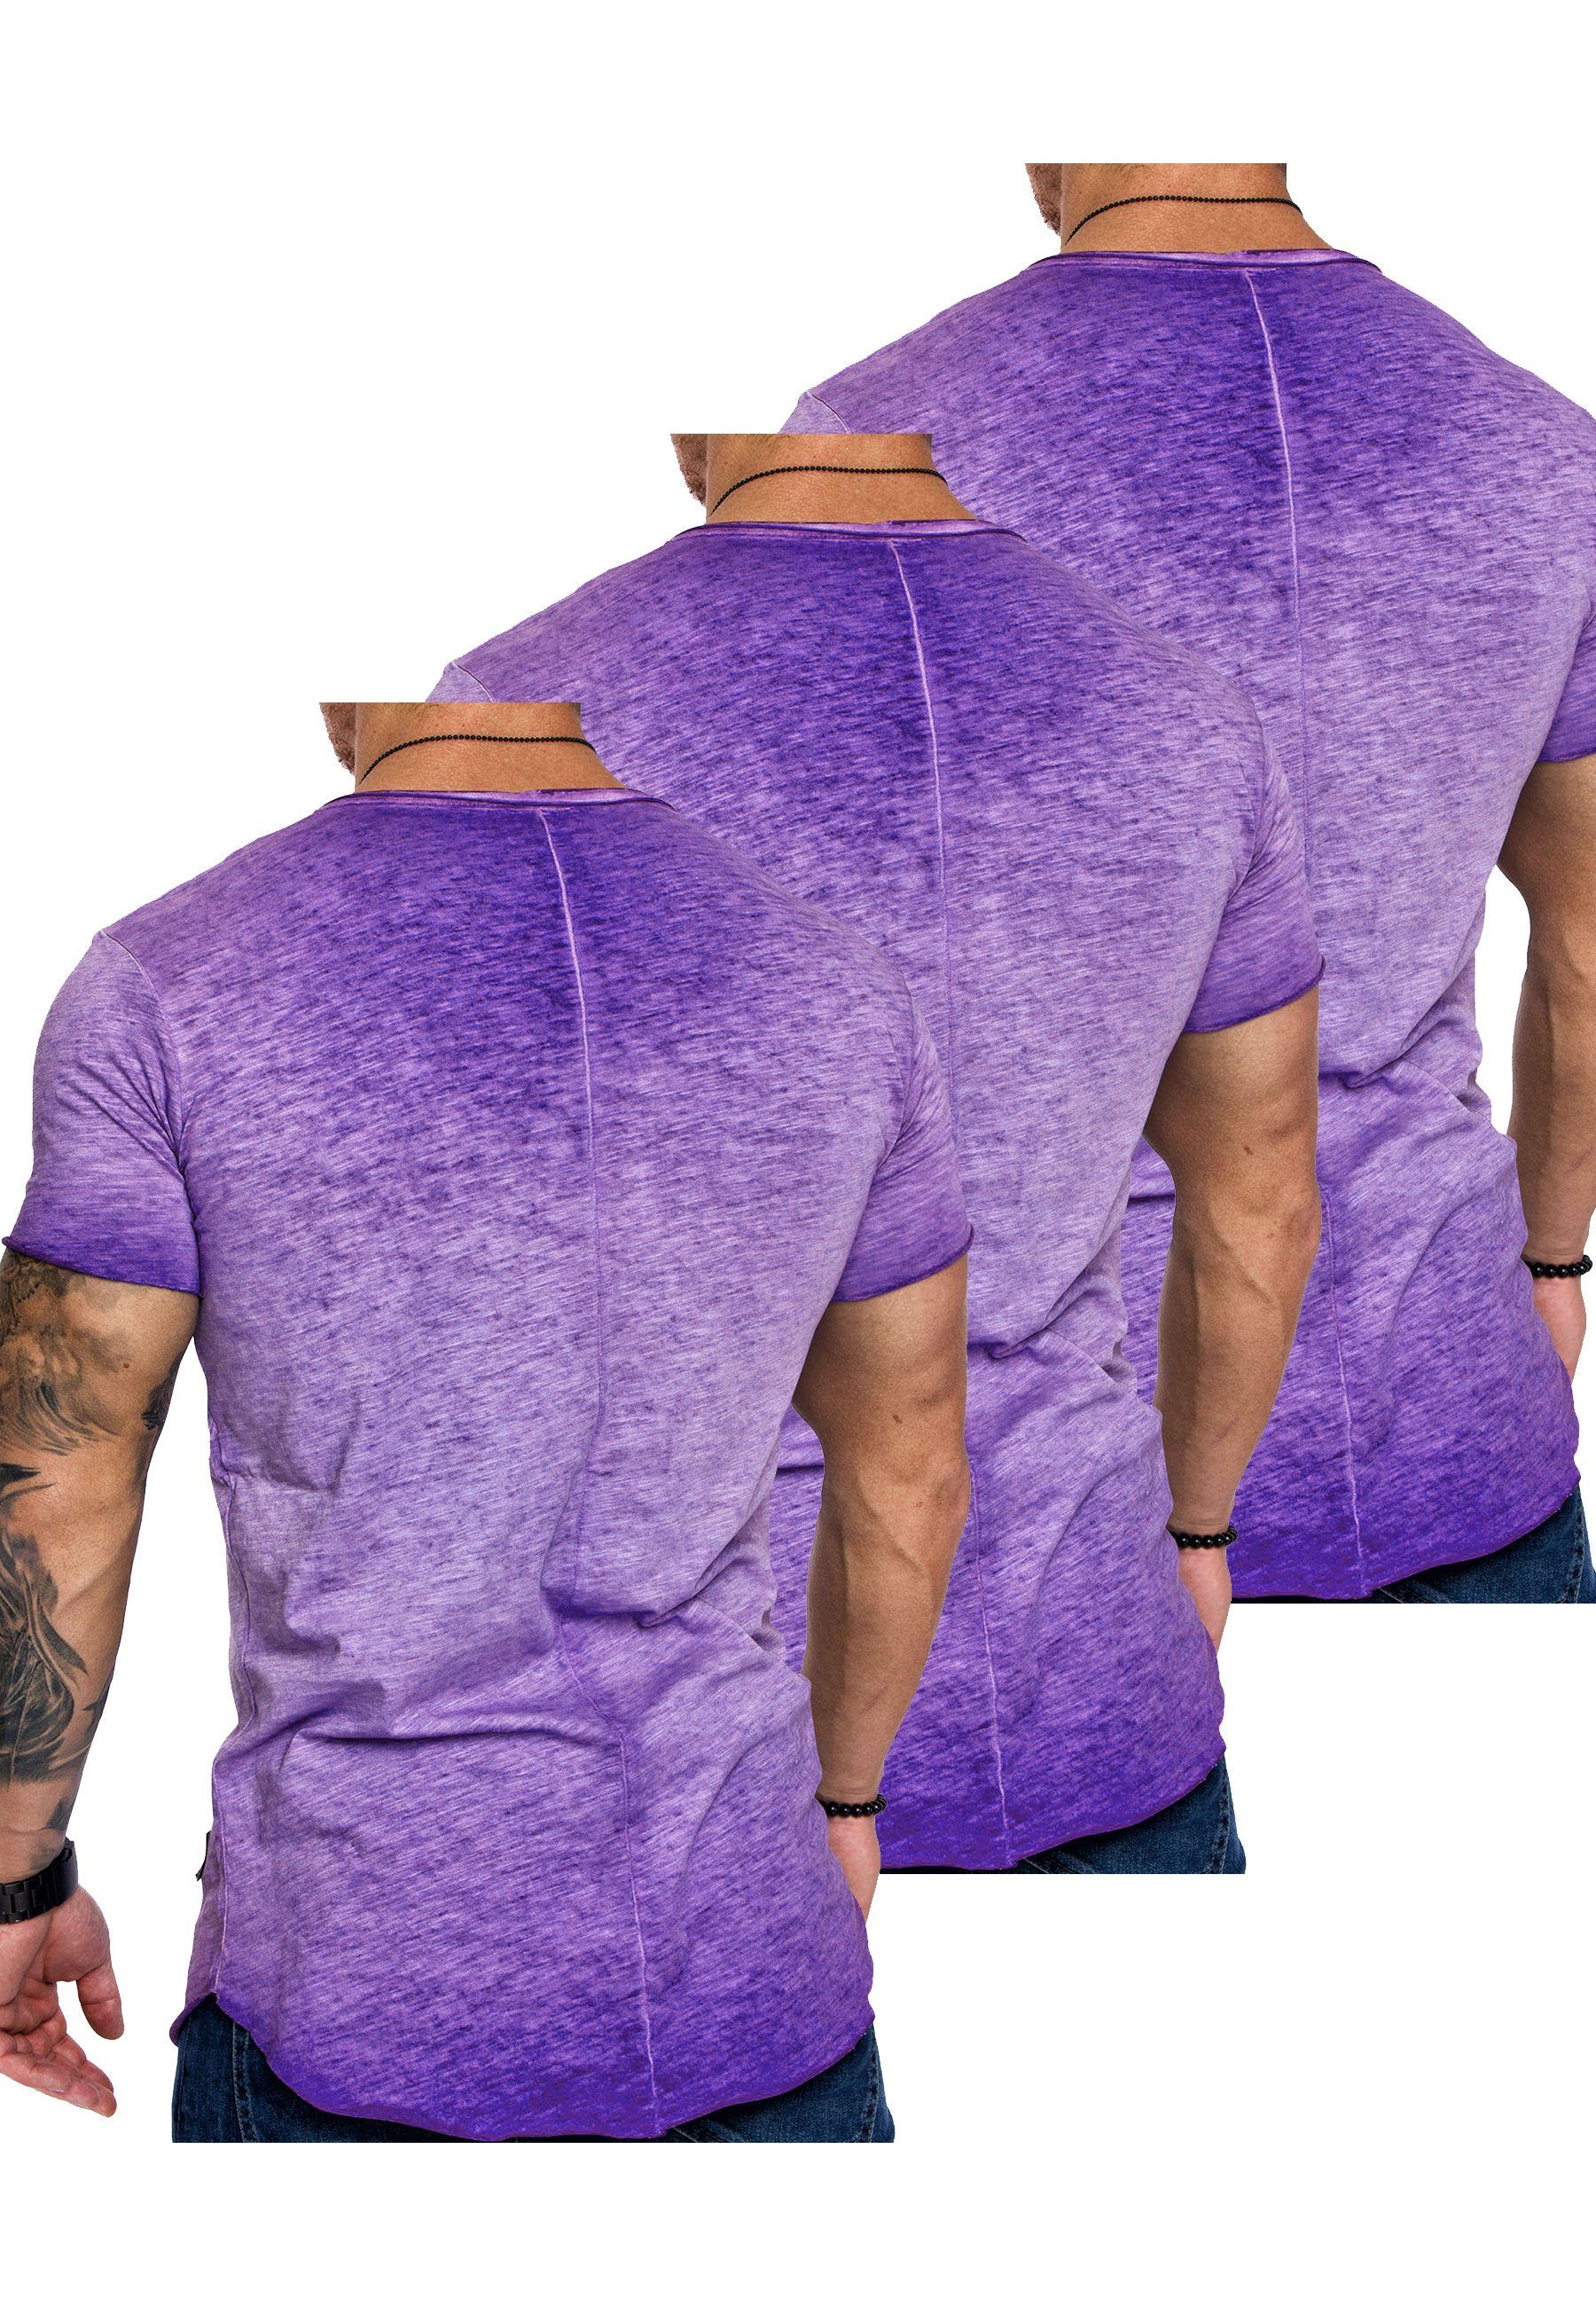 Amaci&Sons T-Shirt 3. (3er-Pack) T-Shirts mit FRANCISCO SAN 3er-Pack T-Shirt Basic V-Ausschnitt Herren Oversize Lila) (3x